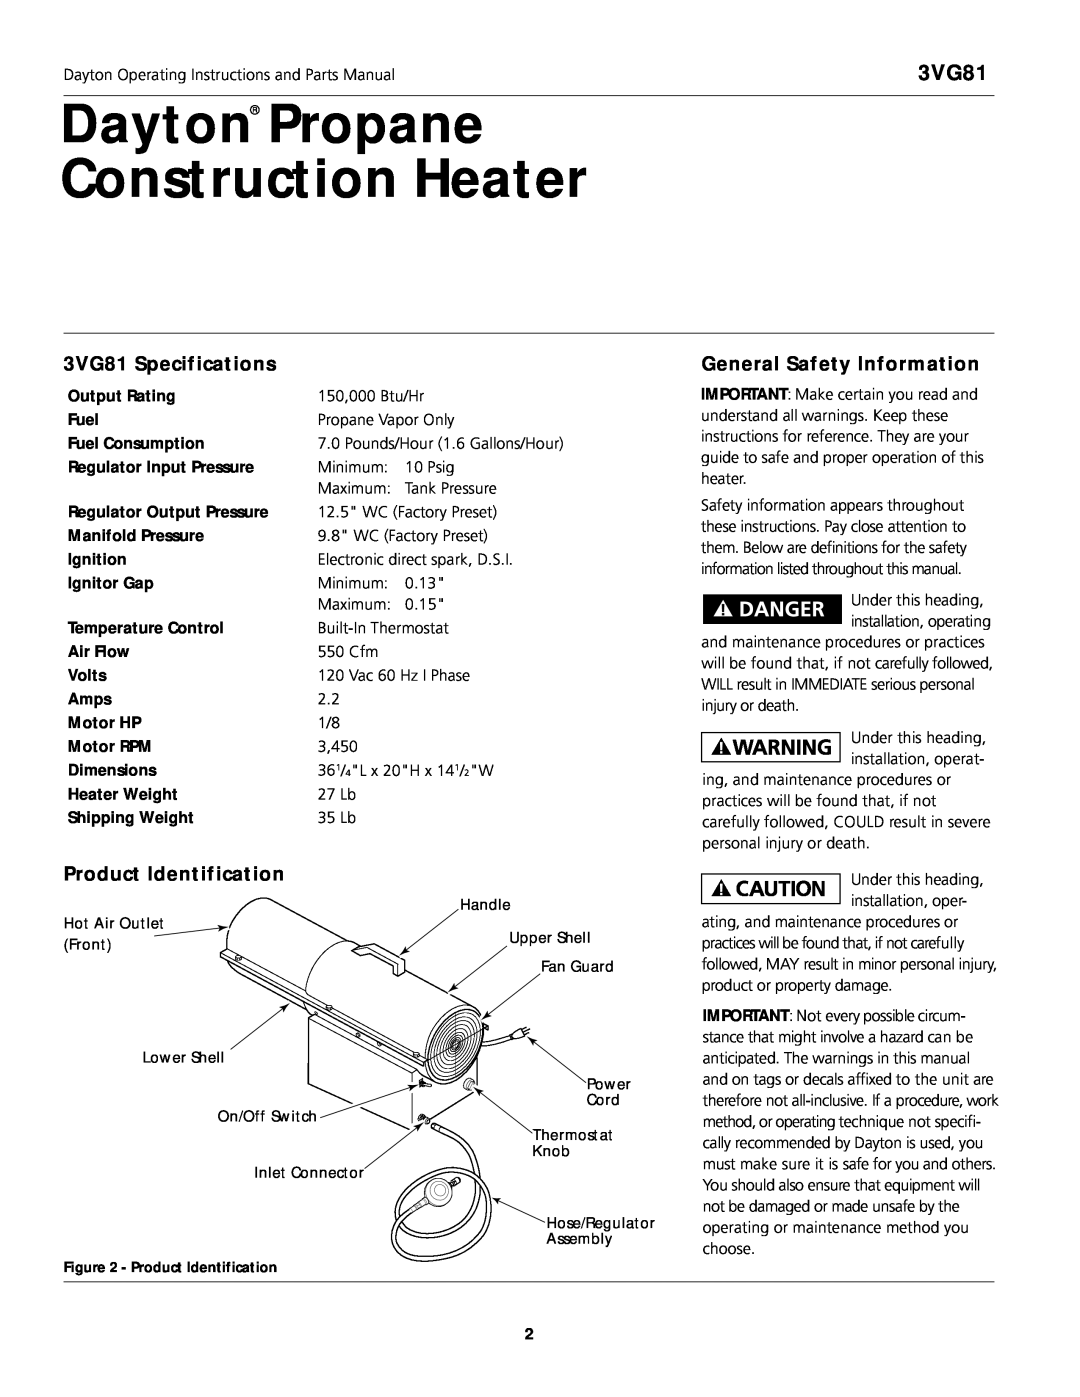 Dayton Dayton Propane Construction Heater, 3VG81 Specifications, Product Identification, General Safety Information 